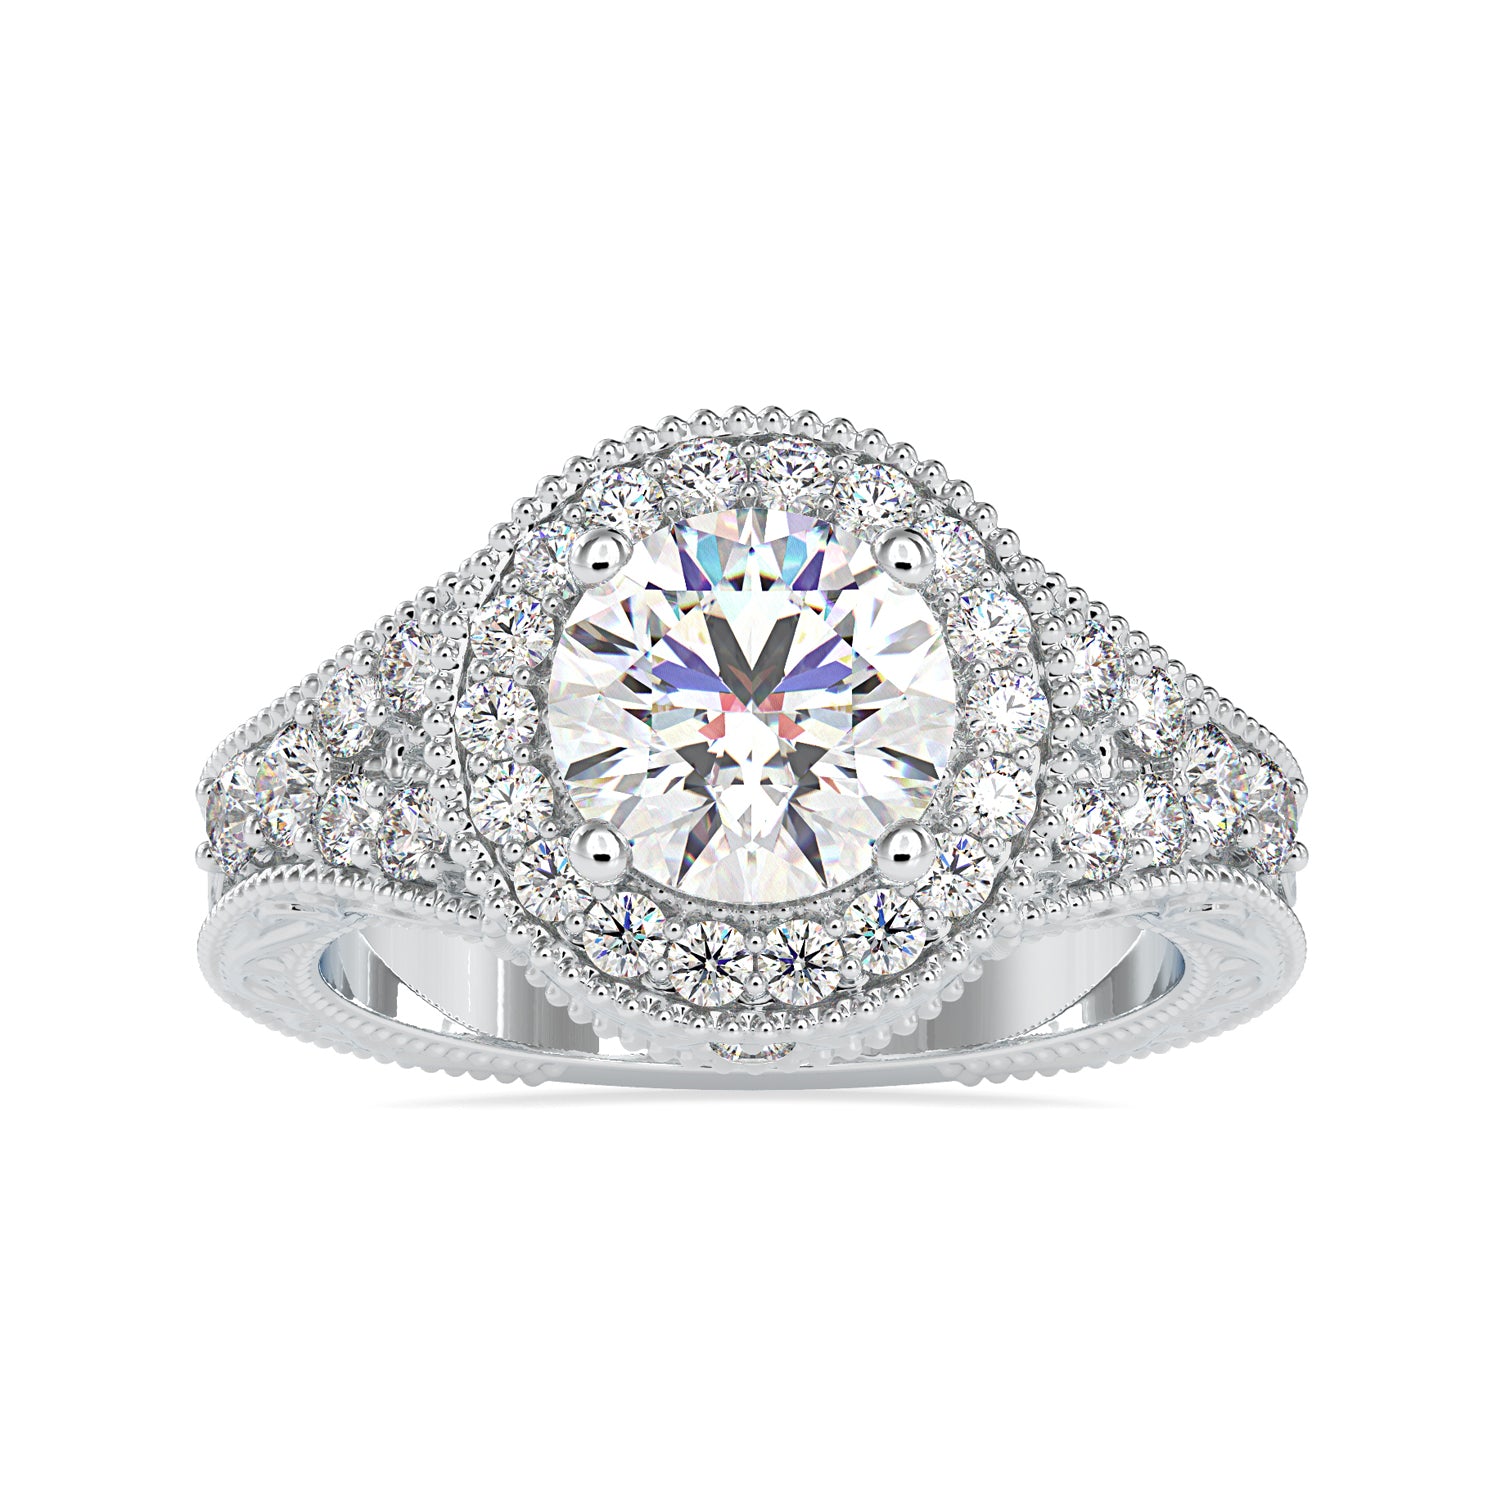 halo engagement ring - diamondrensu